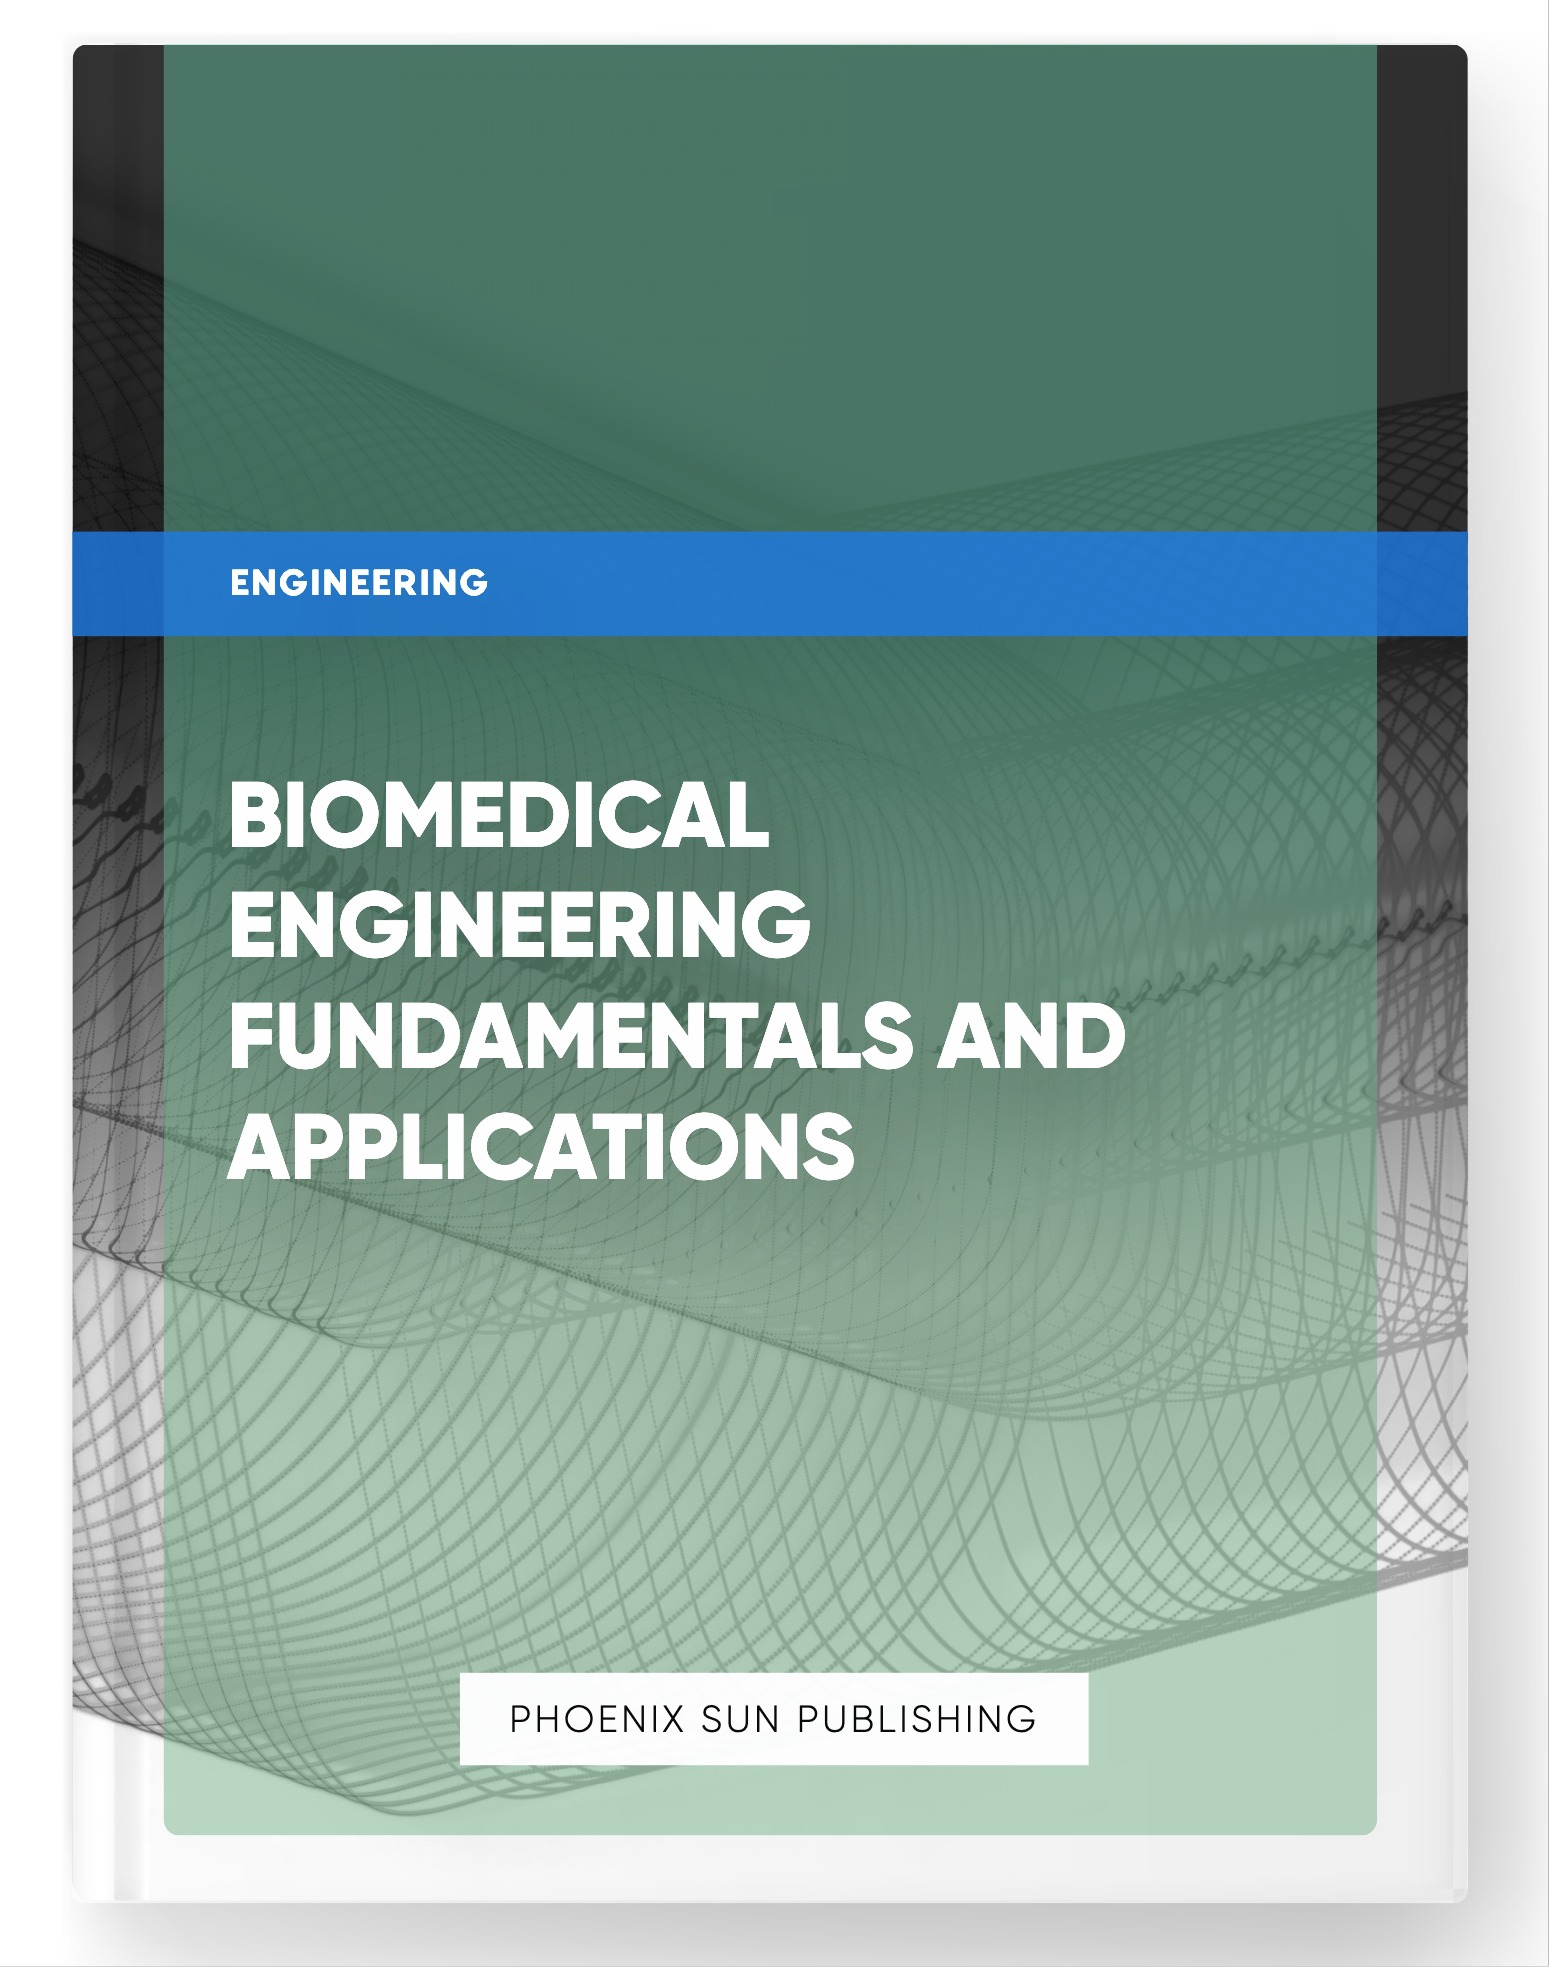 Biomedical Engineering Fundamentals and Applications